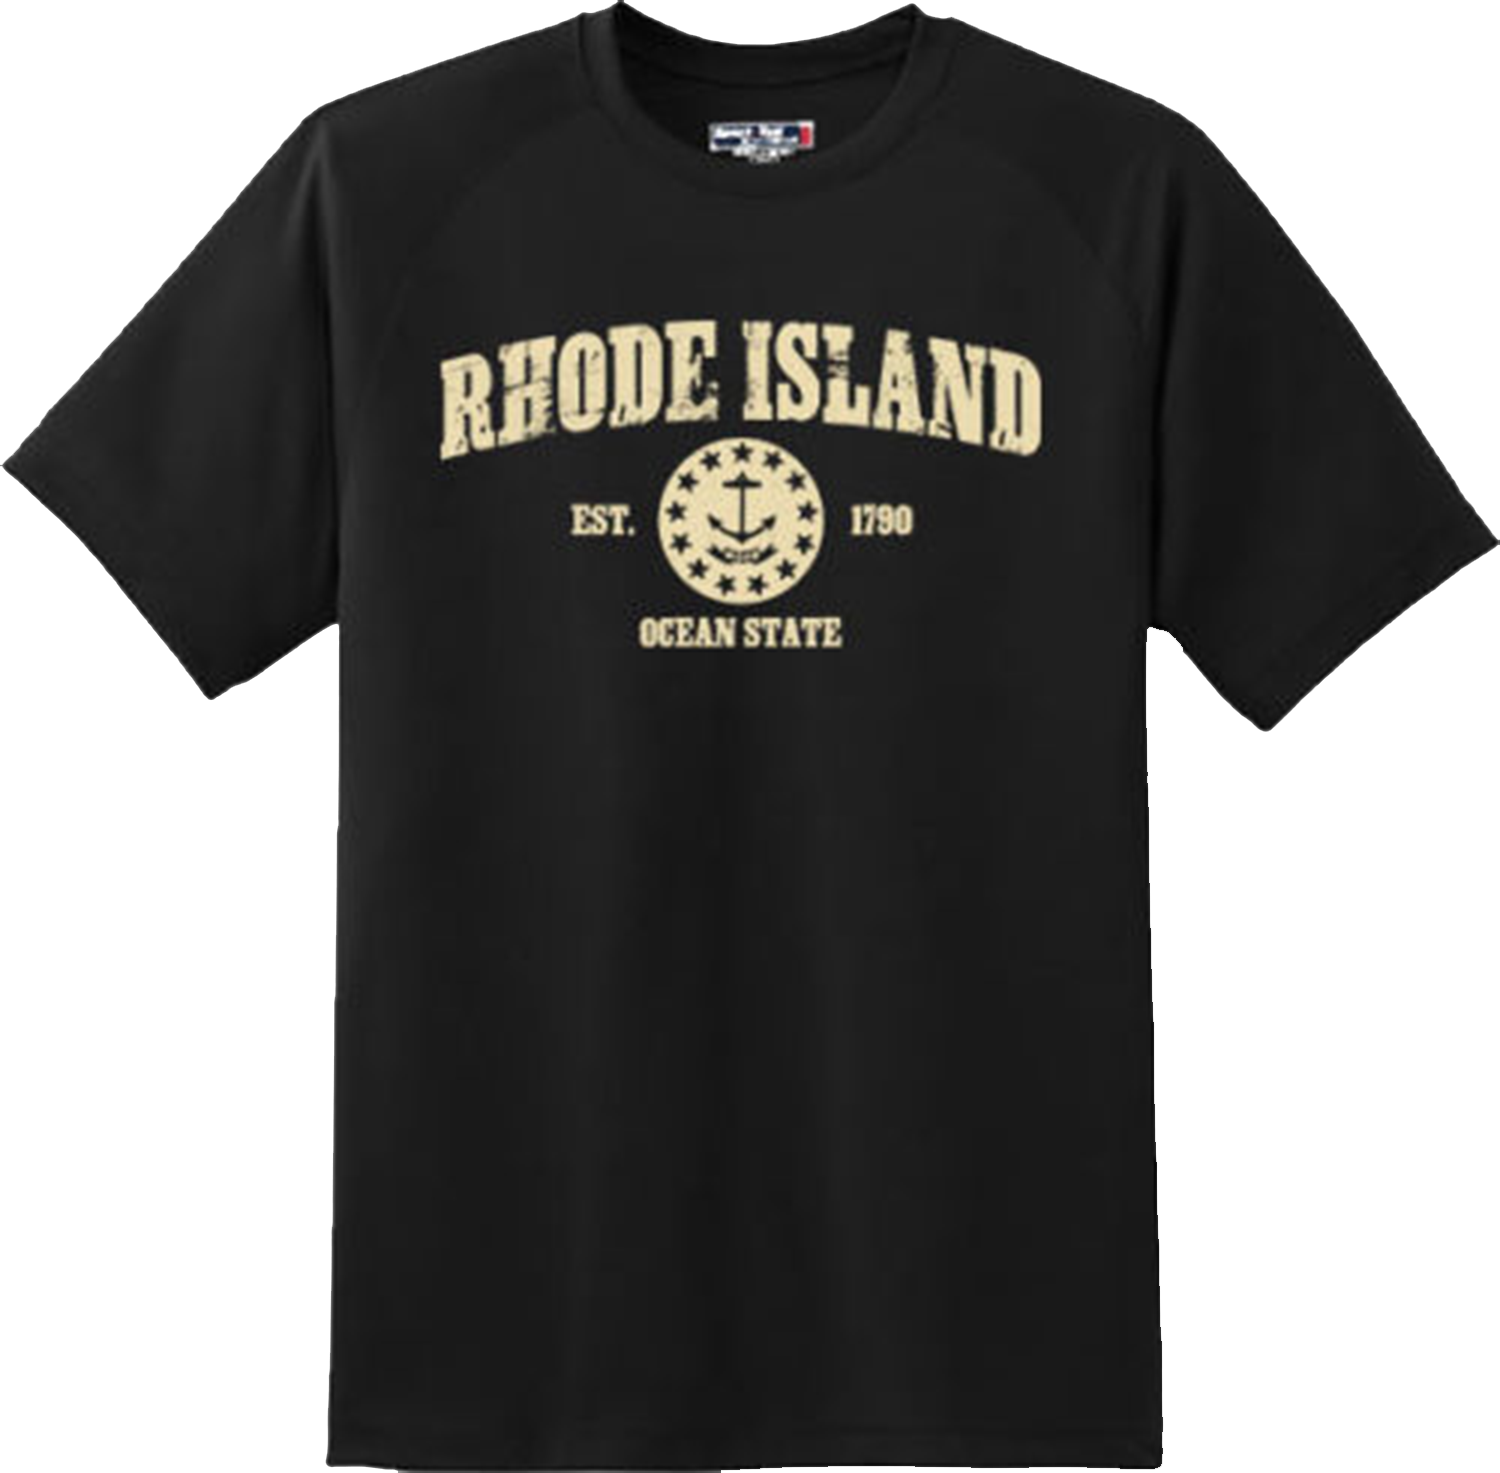 Rhode Island State Vintage Retro Hometown America Gift T Shirt New Graphic Tee